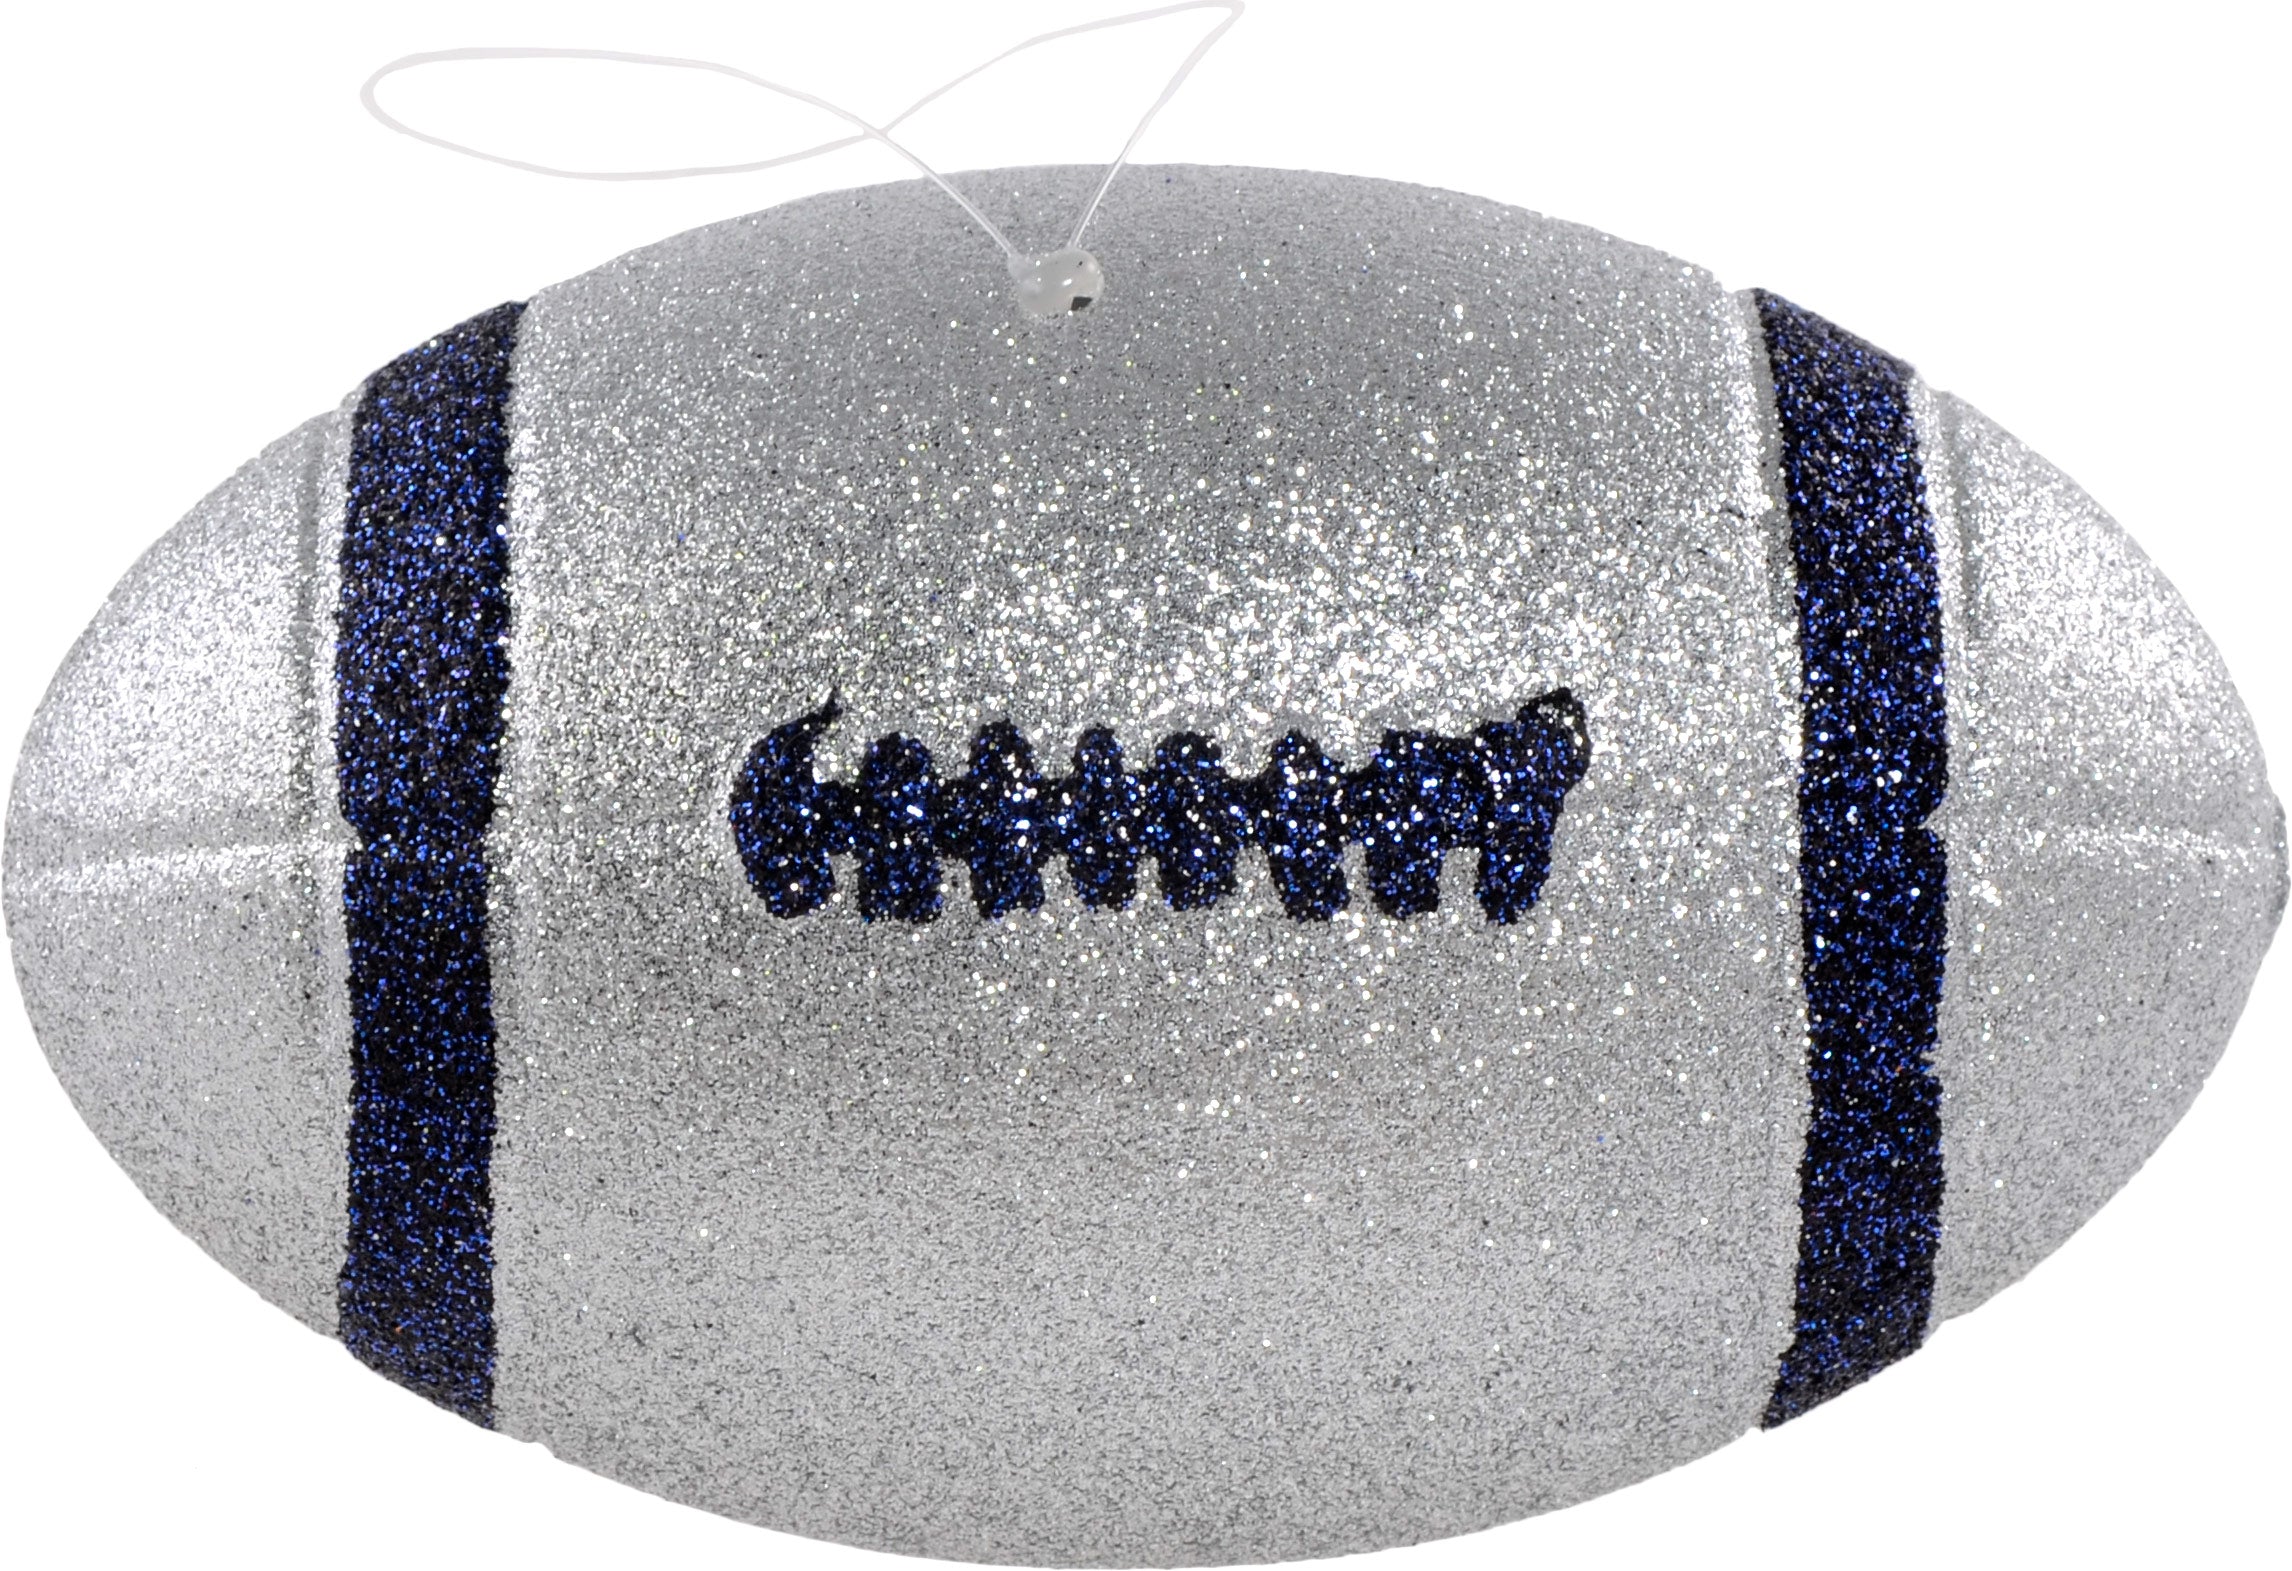 Glitter Football Ornament Assortment: Silver & Navy Blue (Set of 3)